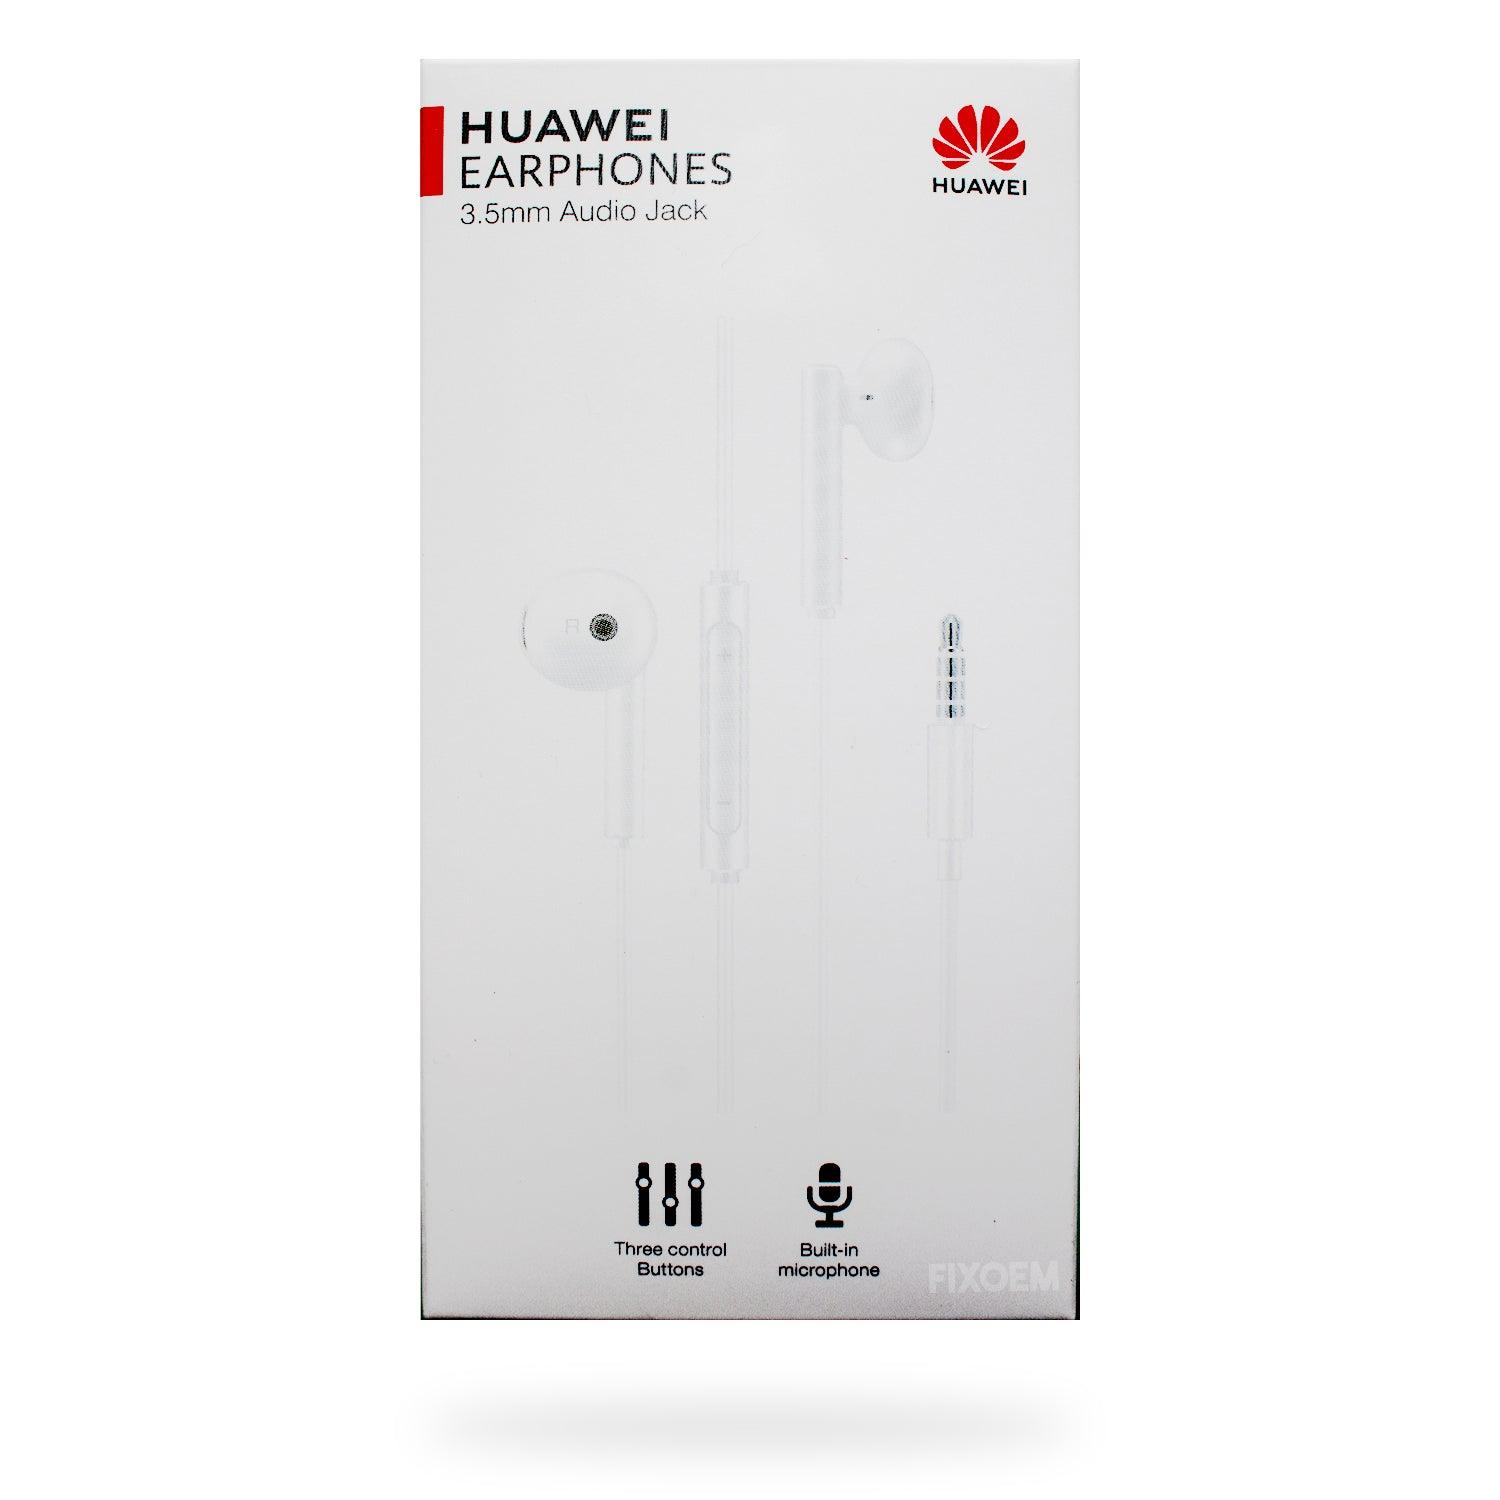 Audifonos Auriculares Huawei Origina Cable Plug 3.5 l Blanco |+2,000 reseñas 4.8/5 ⭐